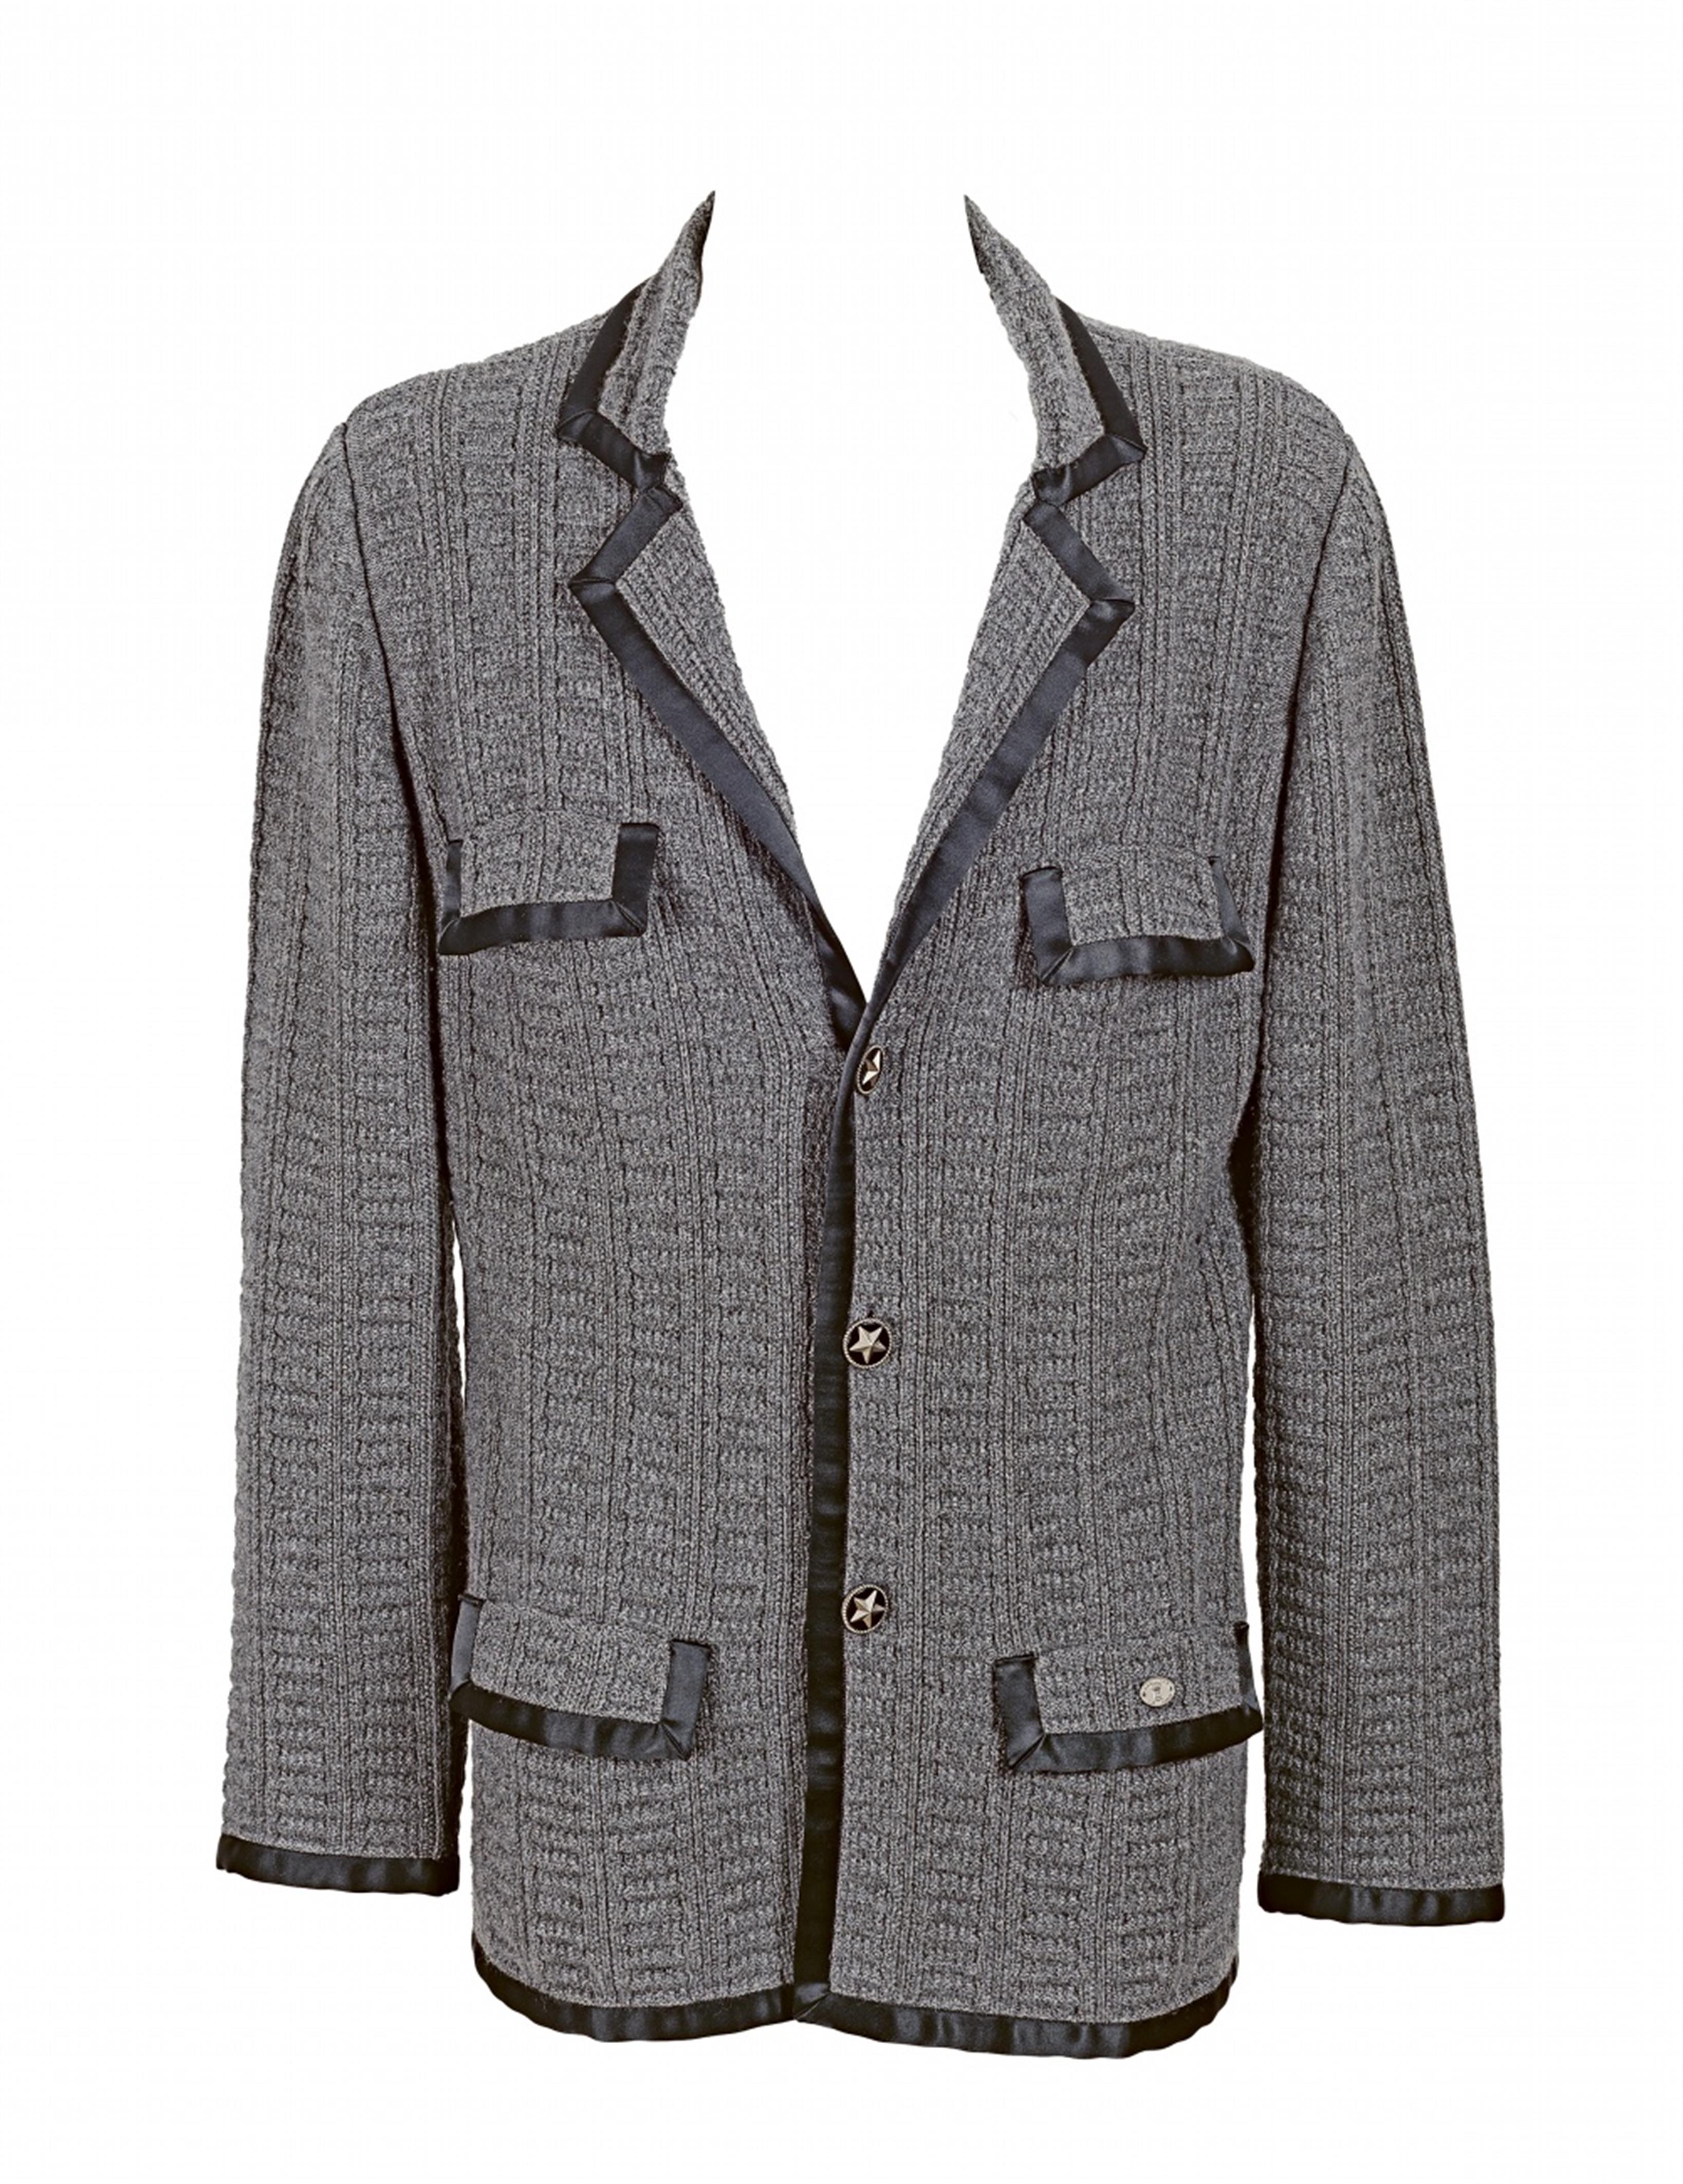 A Chanel men's blazer, Autumn 2007 - image-1